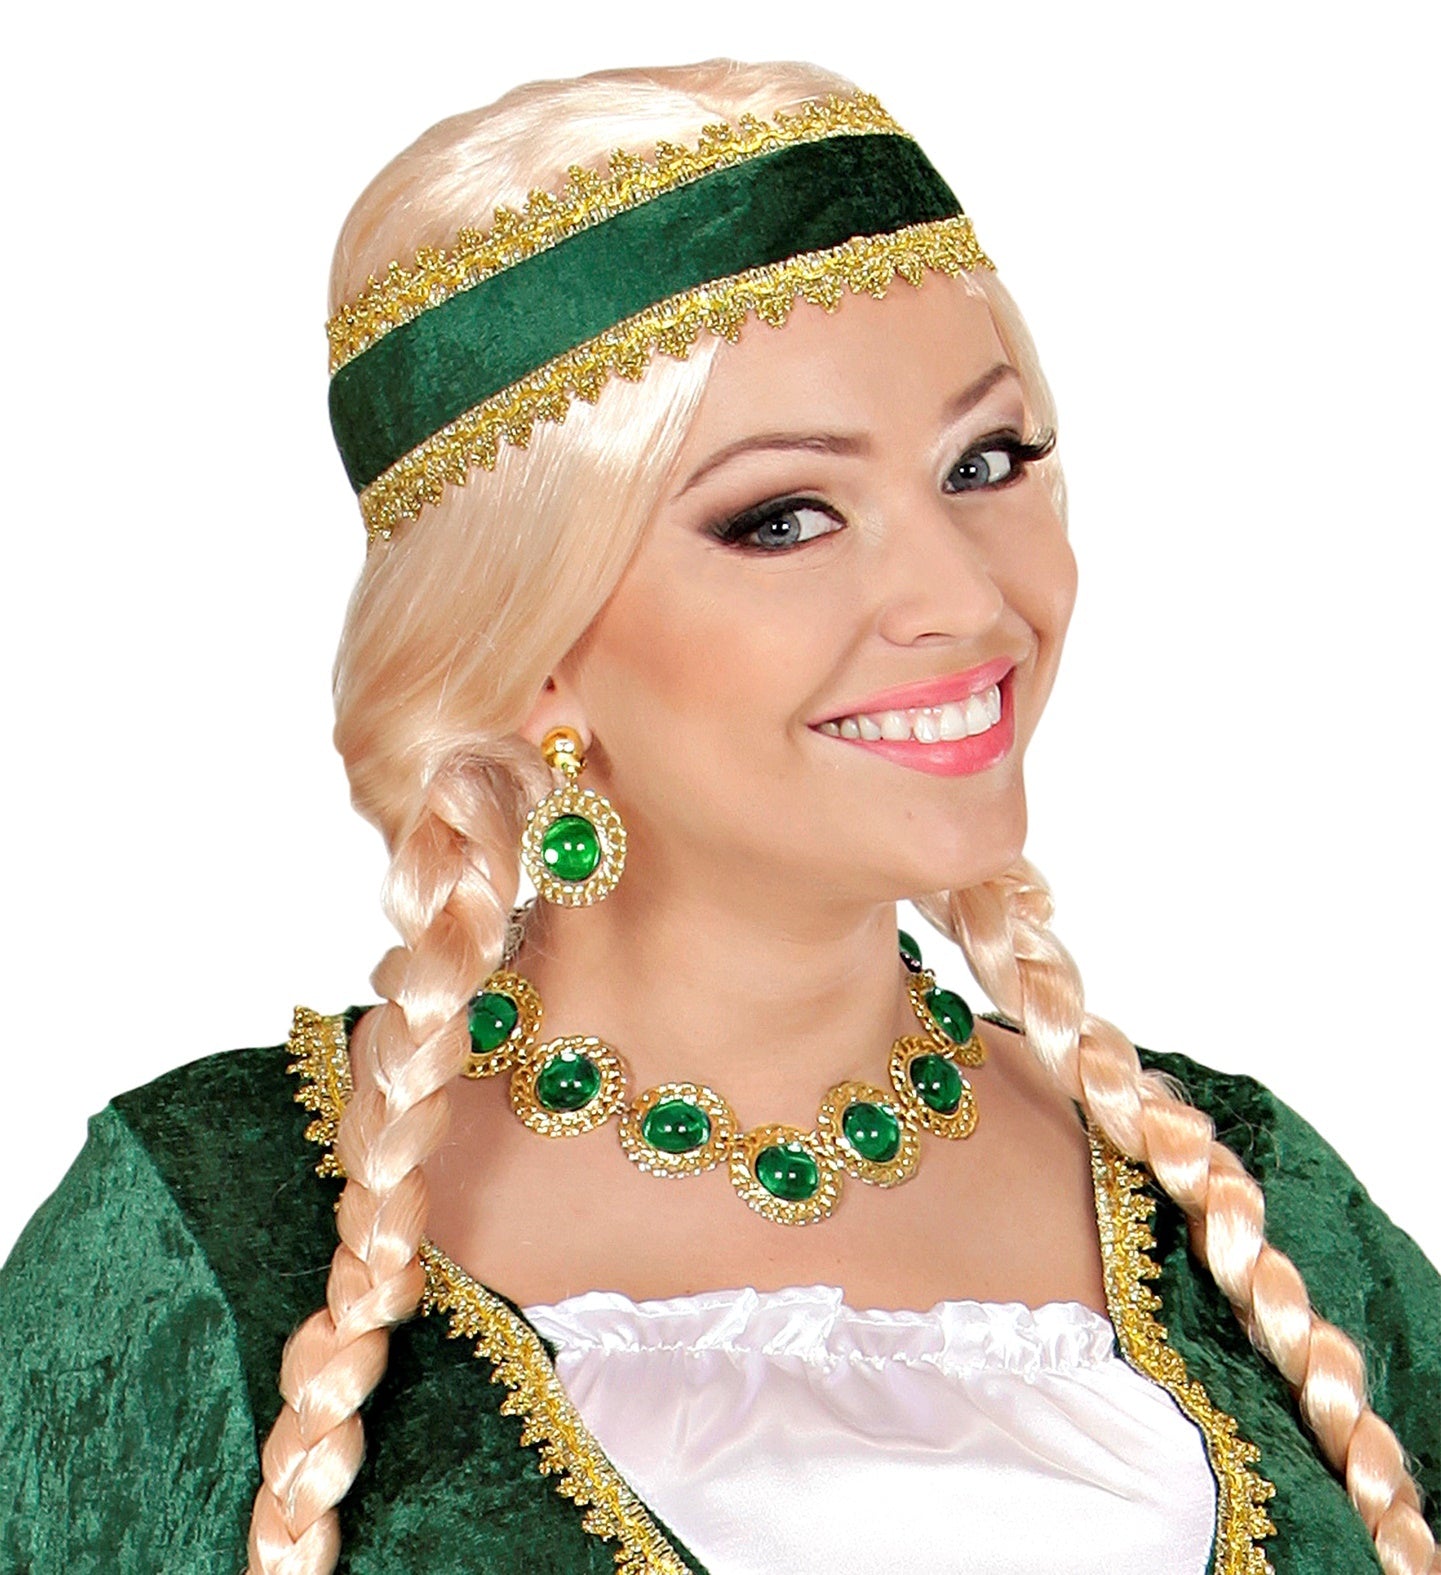 Widmann - Middeleeuwen & Renaissance Kostuum - Sieraden Set Koningin Groen En Goud - groen,goud - Halloween - Verkleedkleding